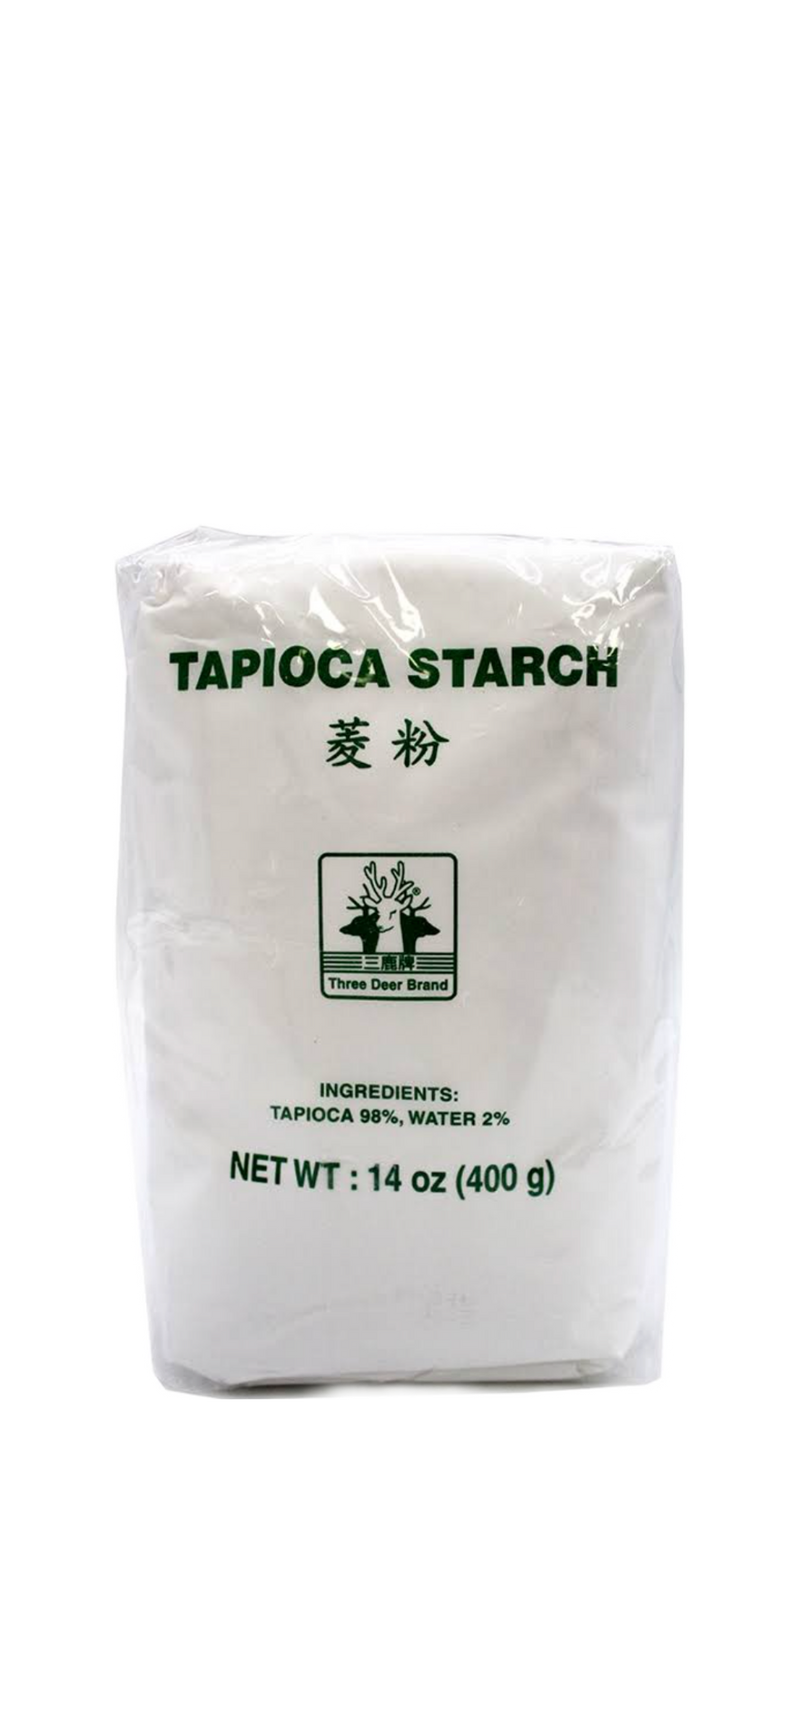 Three Deer Brand Tapioca Starch